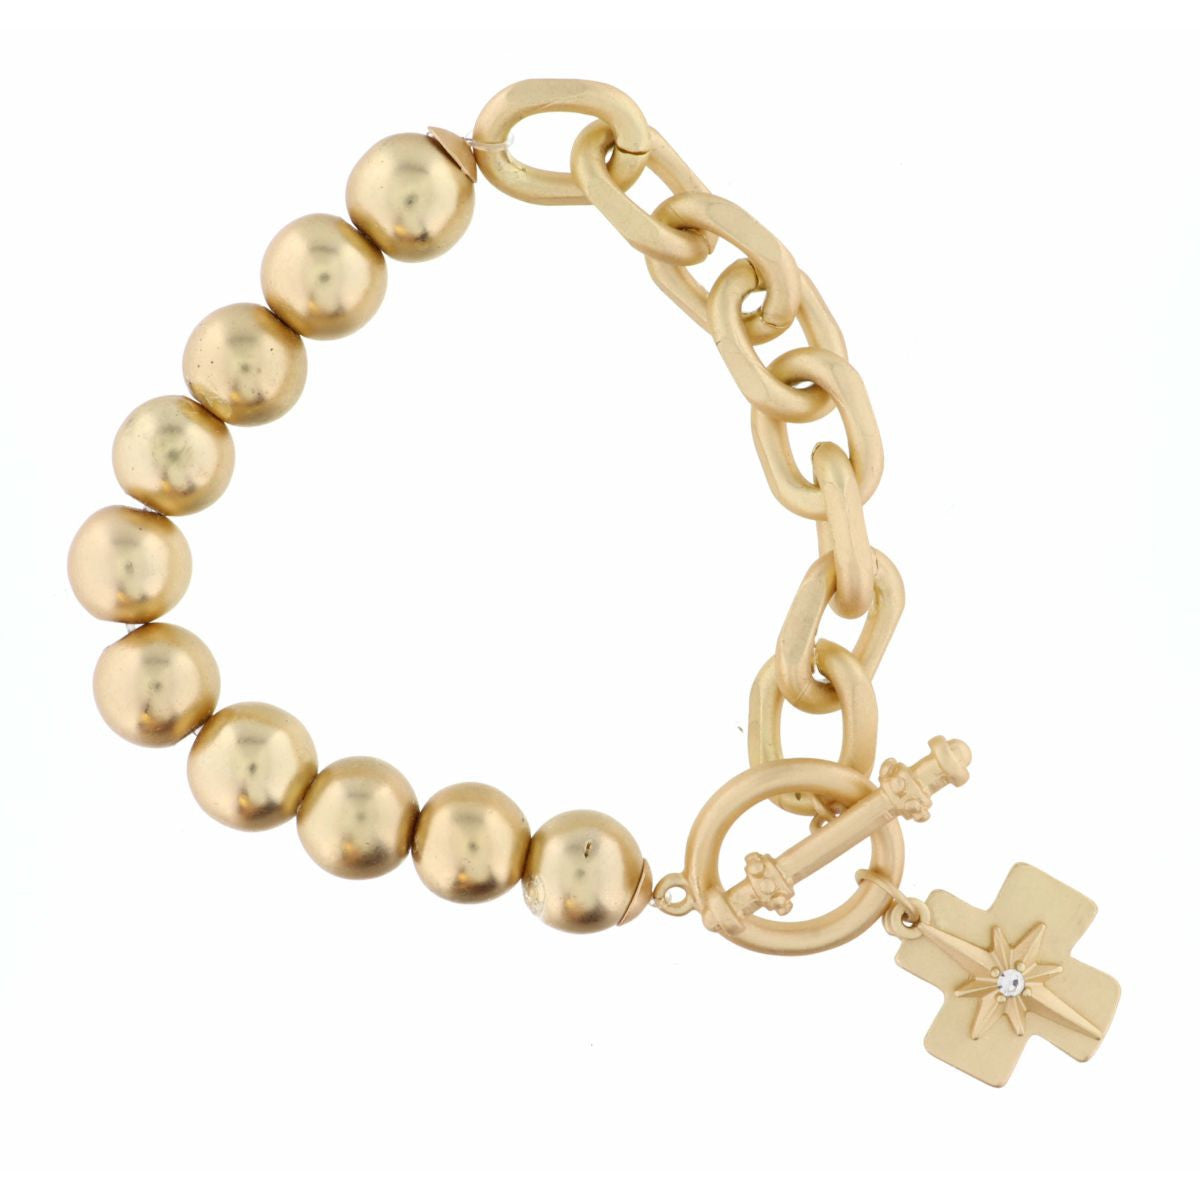 Gold Cross and Star Charm Bracelet